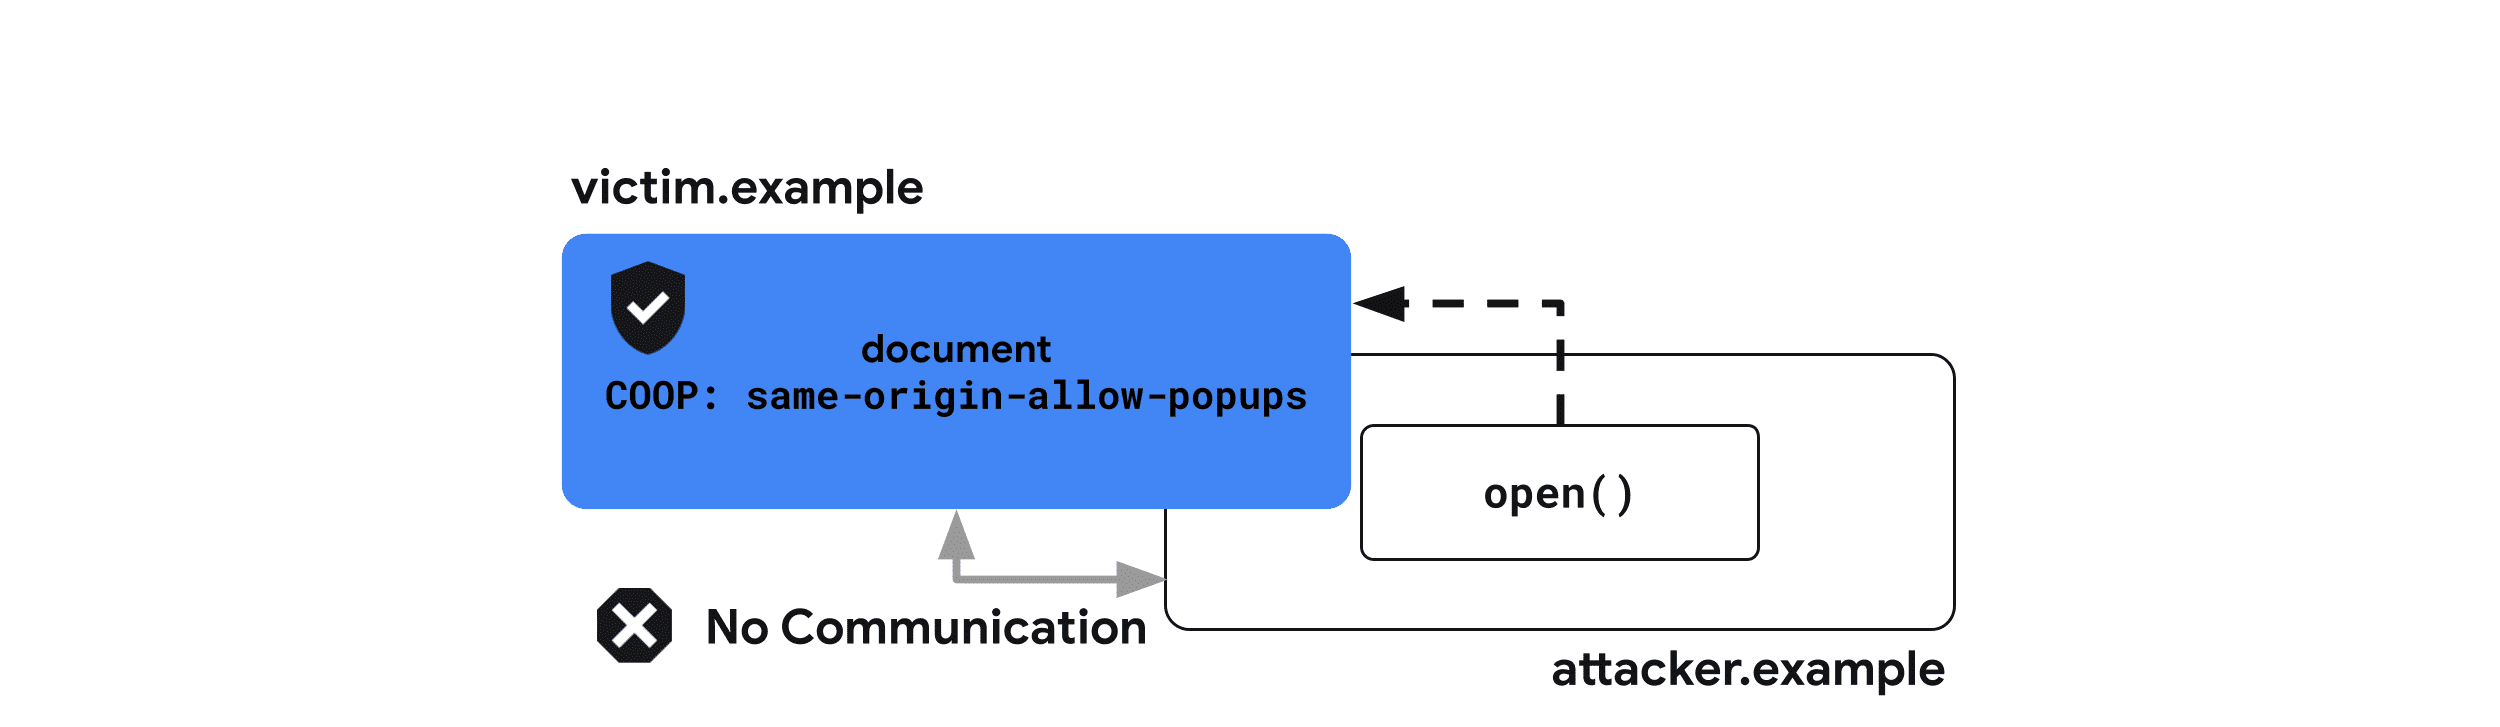 Cross-Origin-Opener-Policy：same-origin-allow-popups